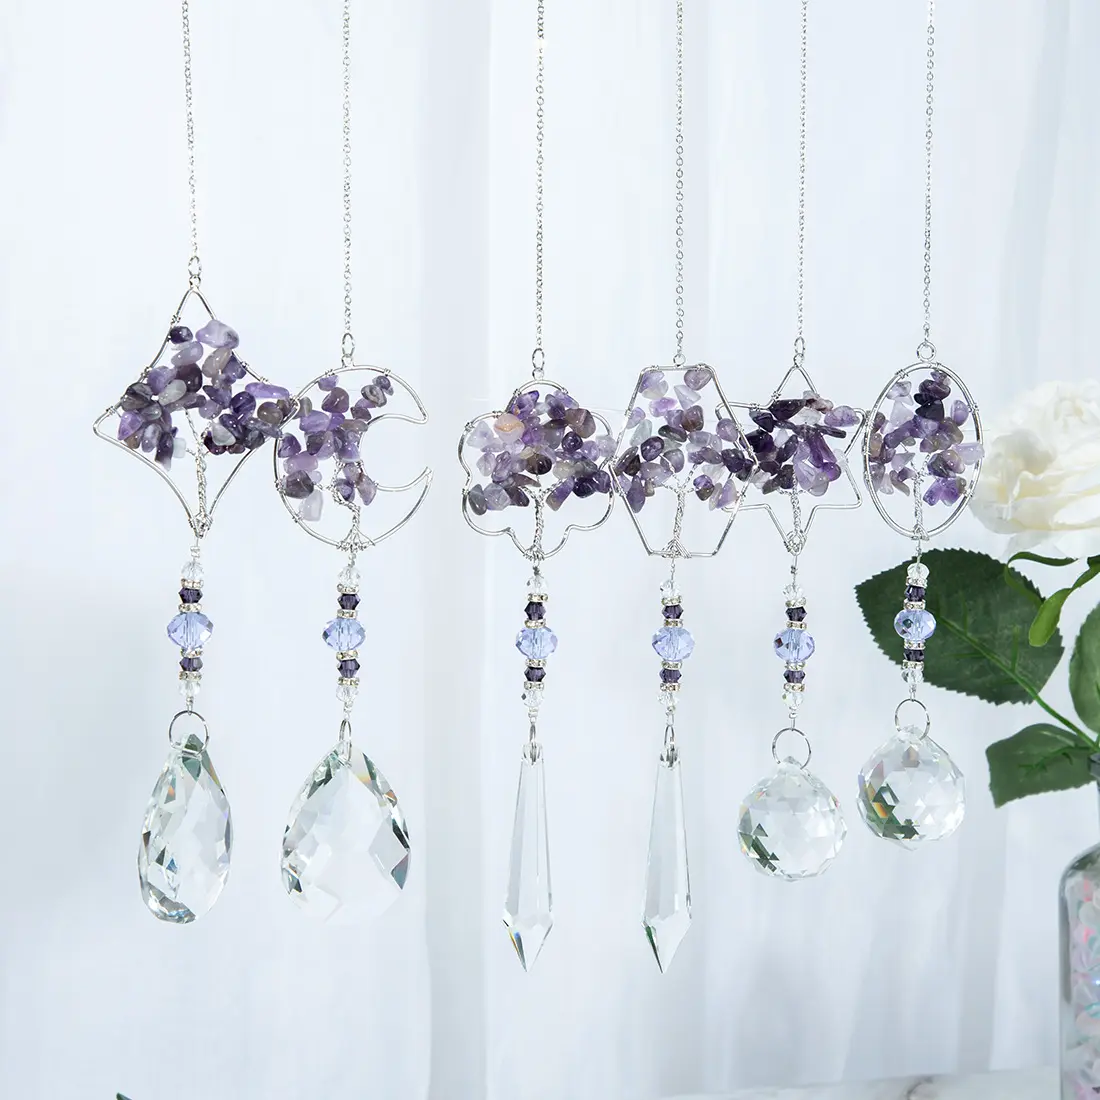 Customizable Natural crystal sun catcher crystal sun catchers hanging suncatche for decoration